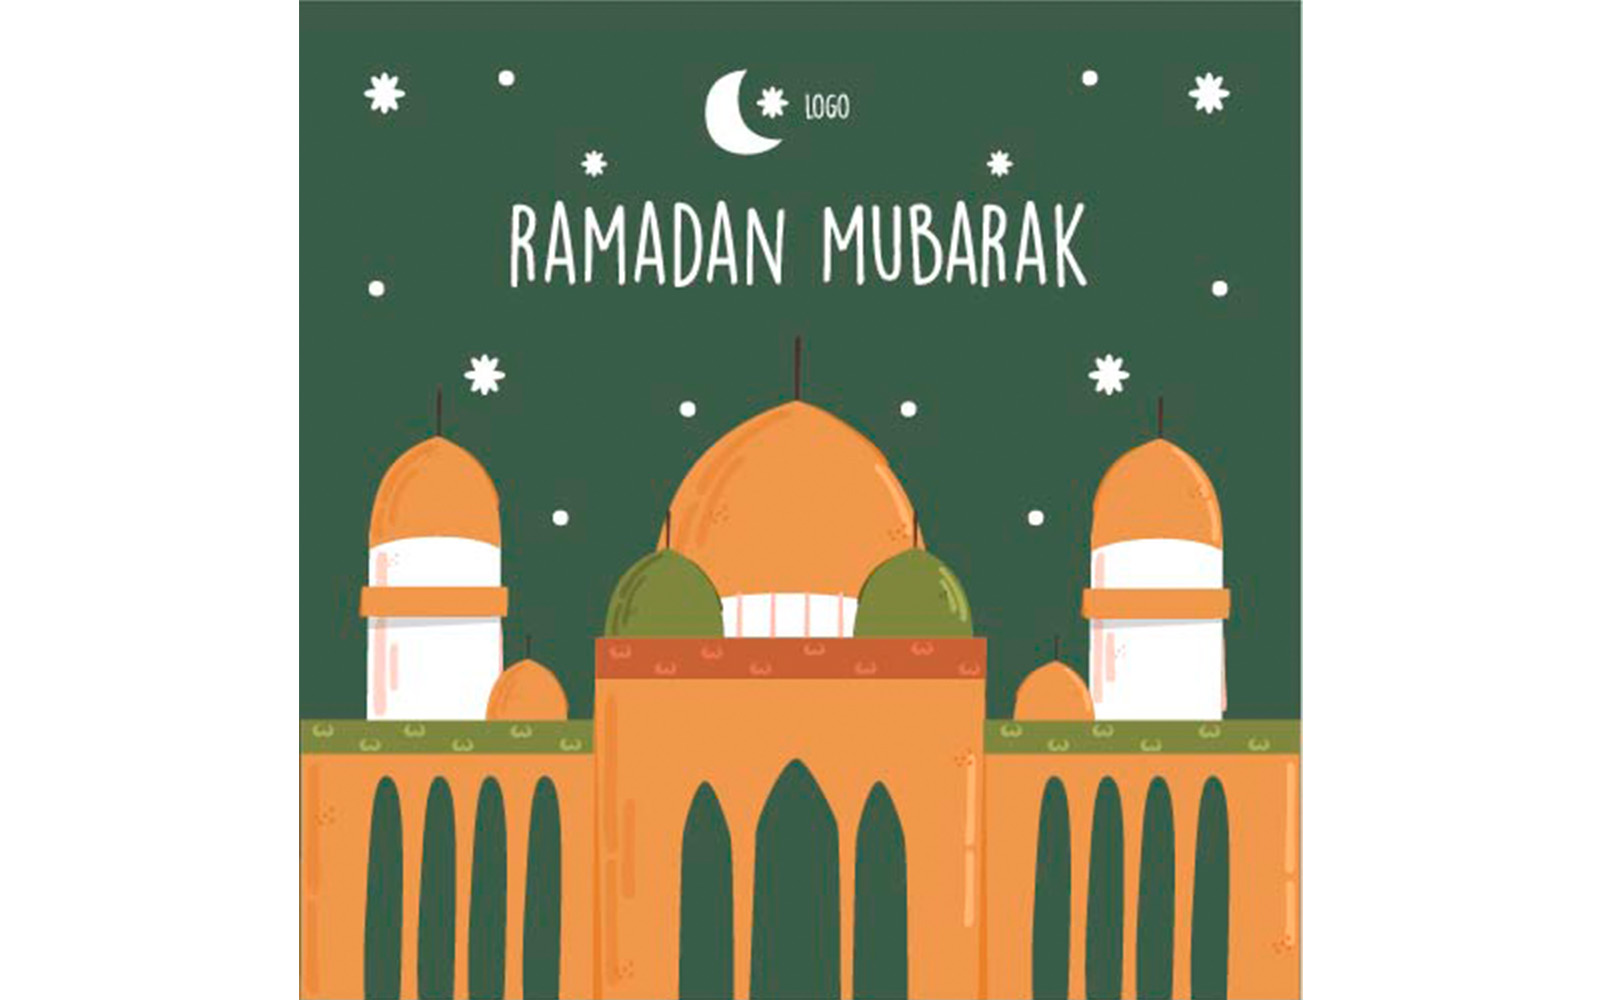 Ramadan Mubarak with Mosque Illustration